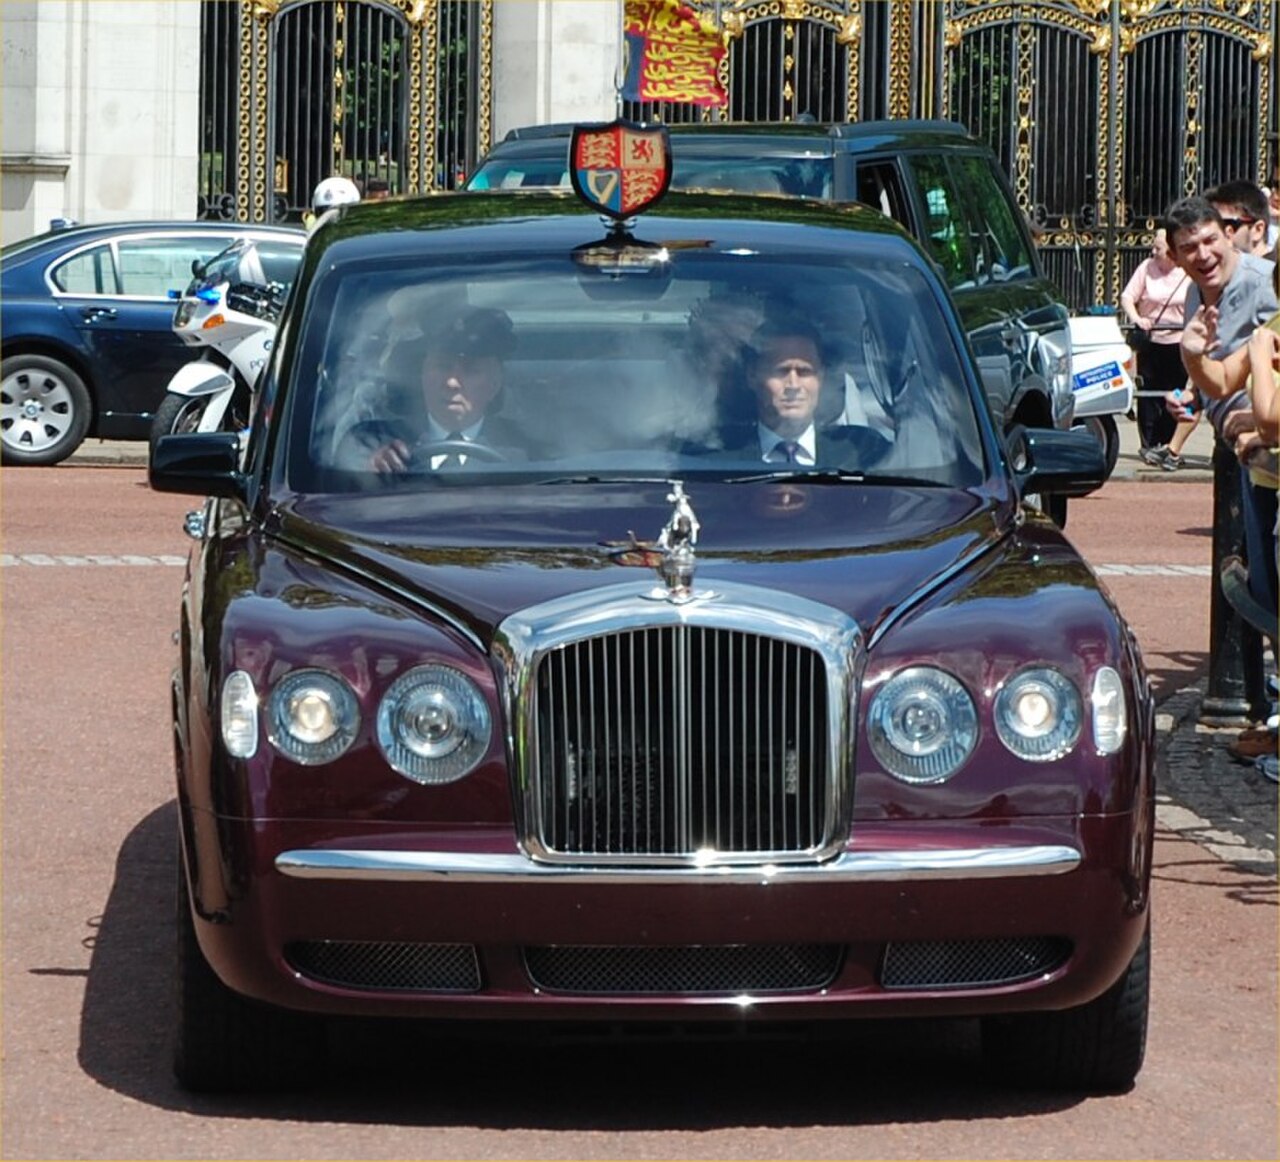 Автомобиль королевы Англии - Bentley State Limousine